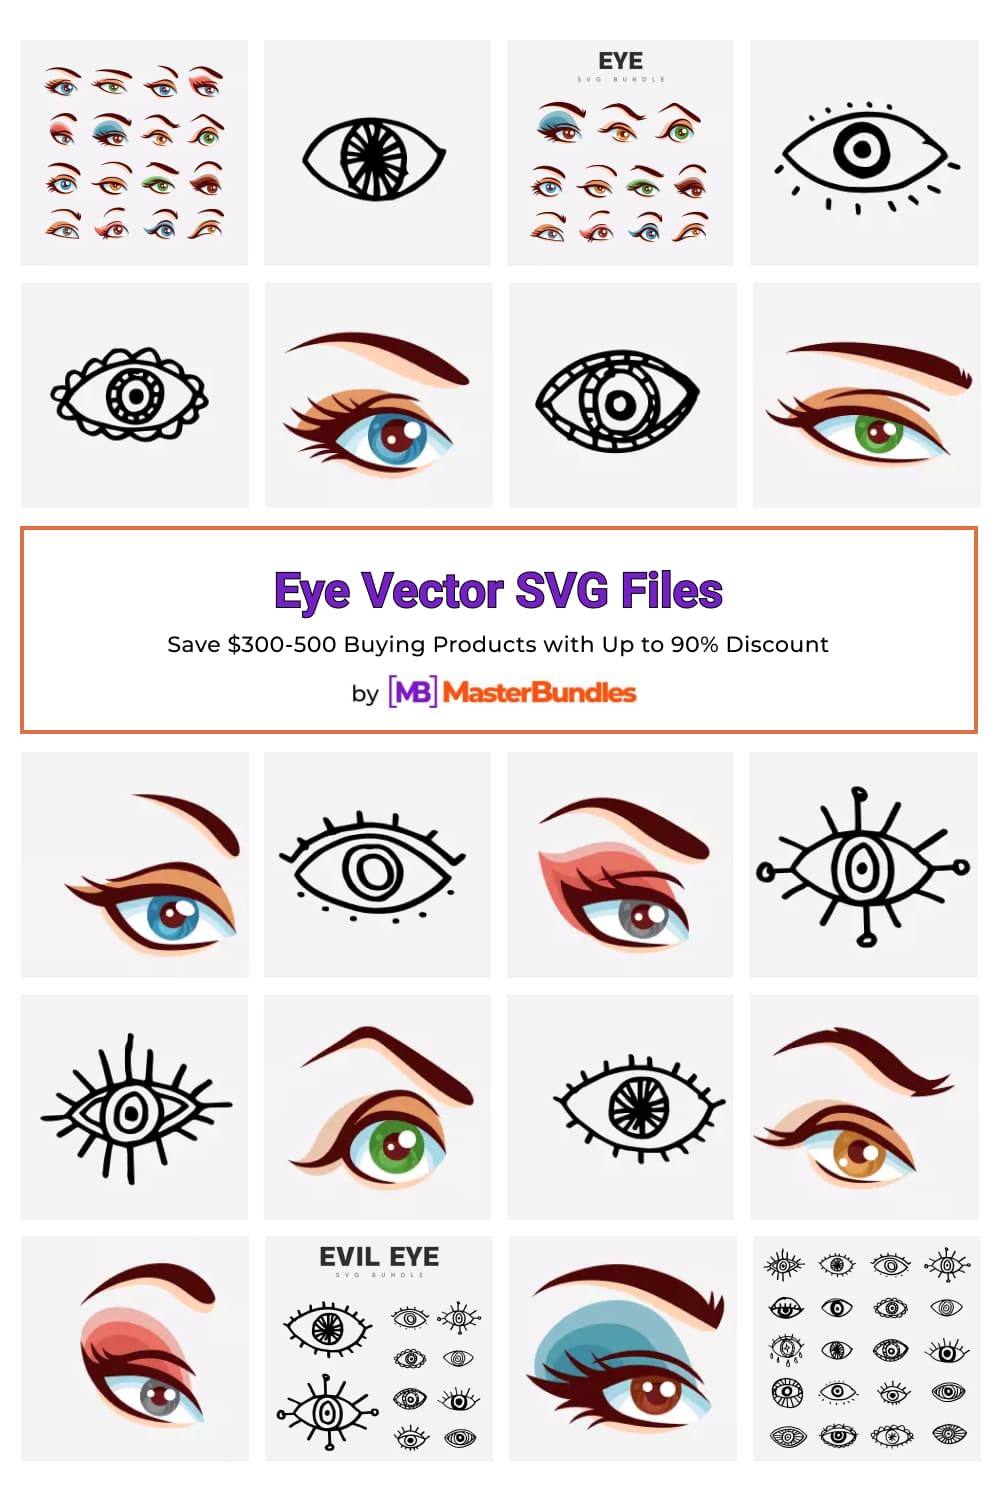 Eye Vector SVG Files Pinterest Image.